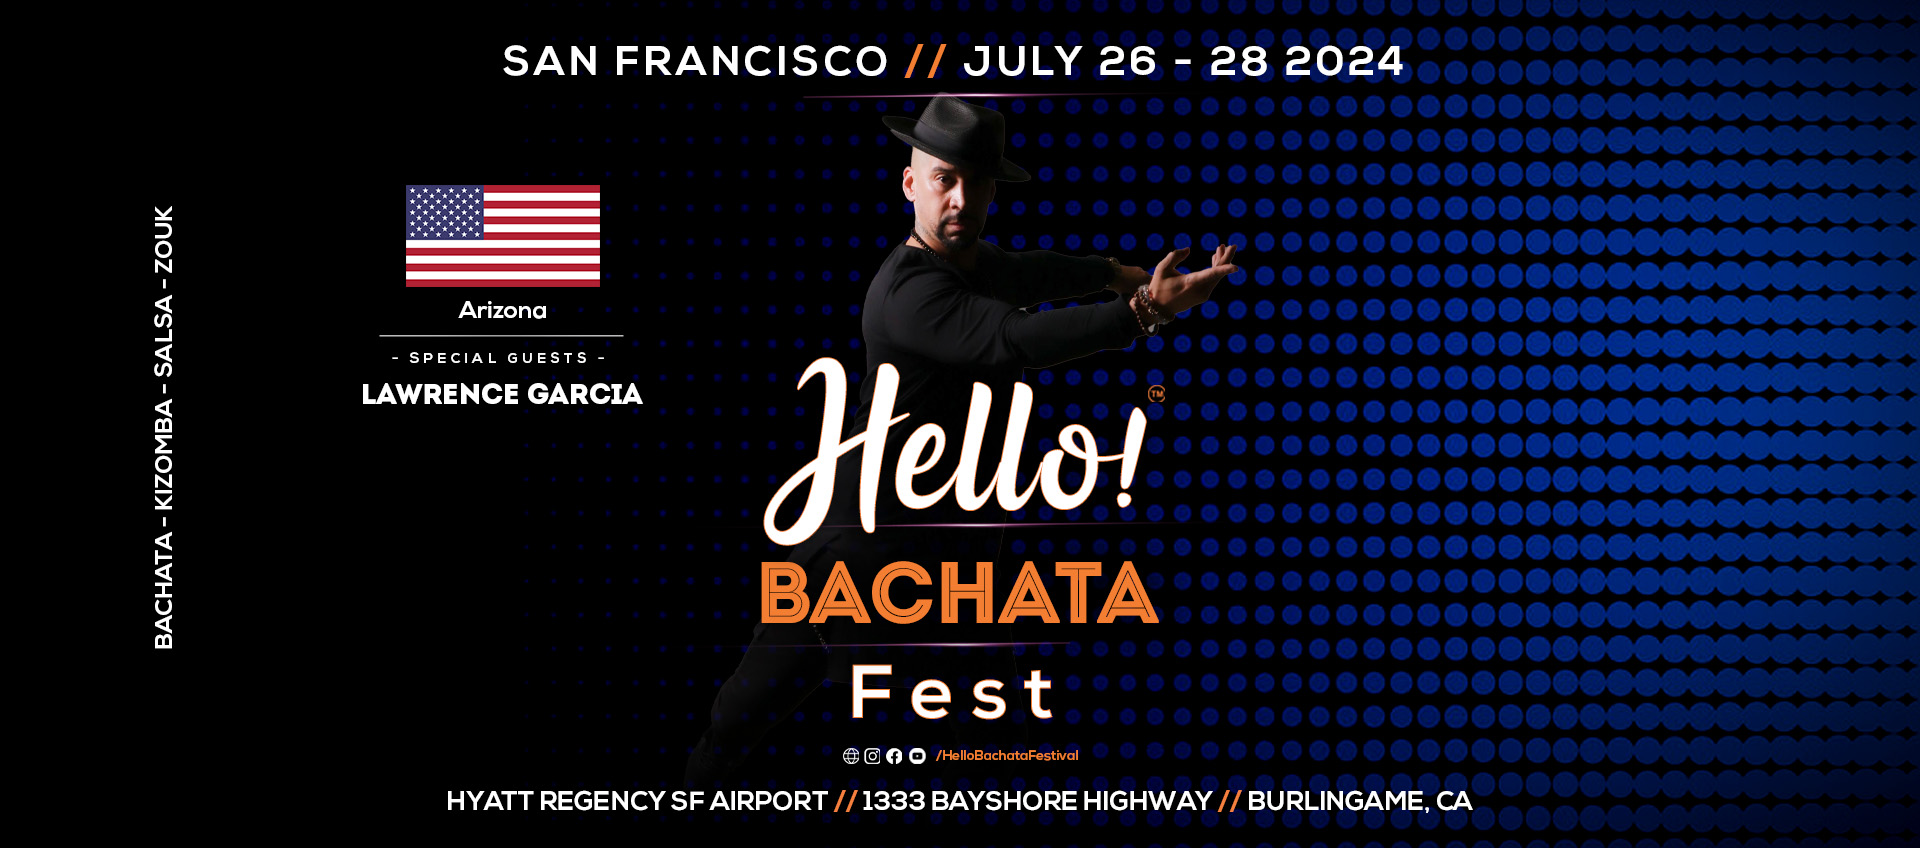 Hello! Bachata Fest - Lawrence Garcia - Salsa